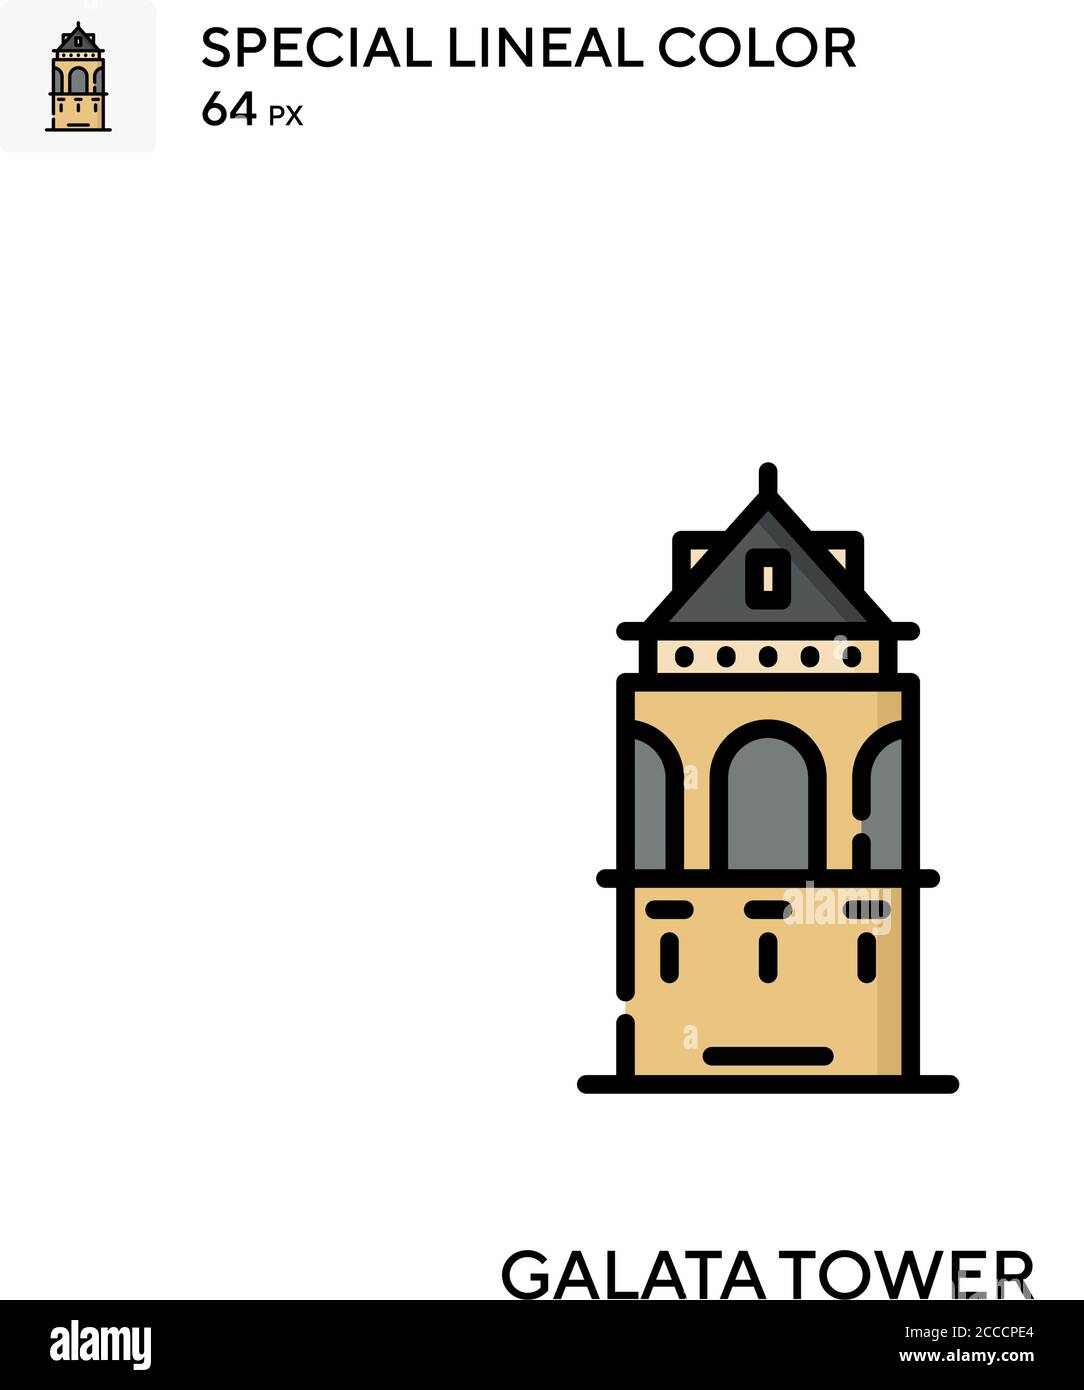 Galata Turm Spezielle lineare Farbe Symbol. Illustration Symbol Design Vorlage für Web mobile UI-Element. Perfekte Farbe modernes Piktogramm auf editierbaren stro Stock Vektor